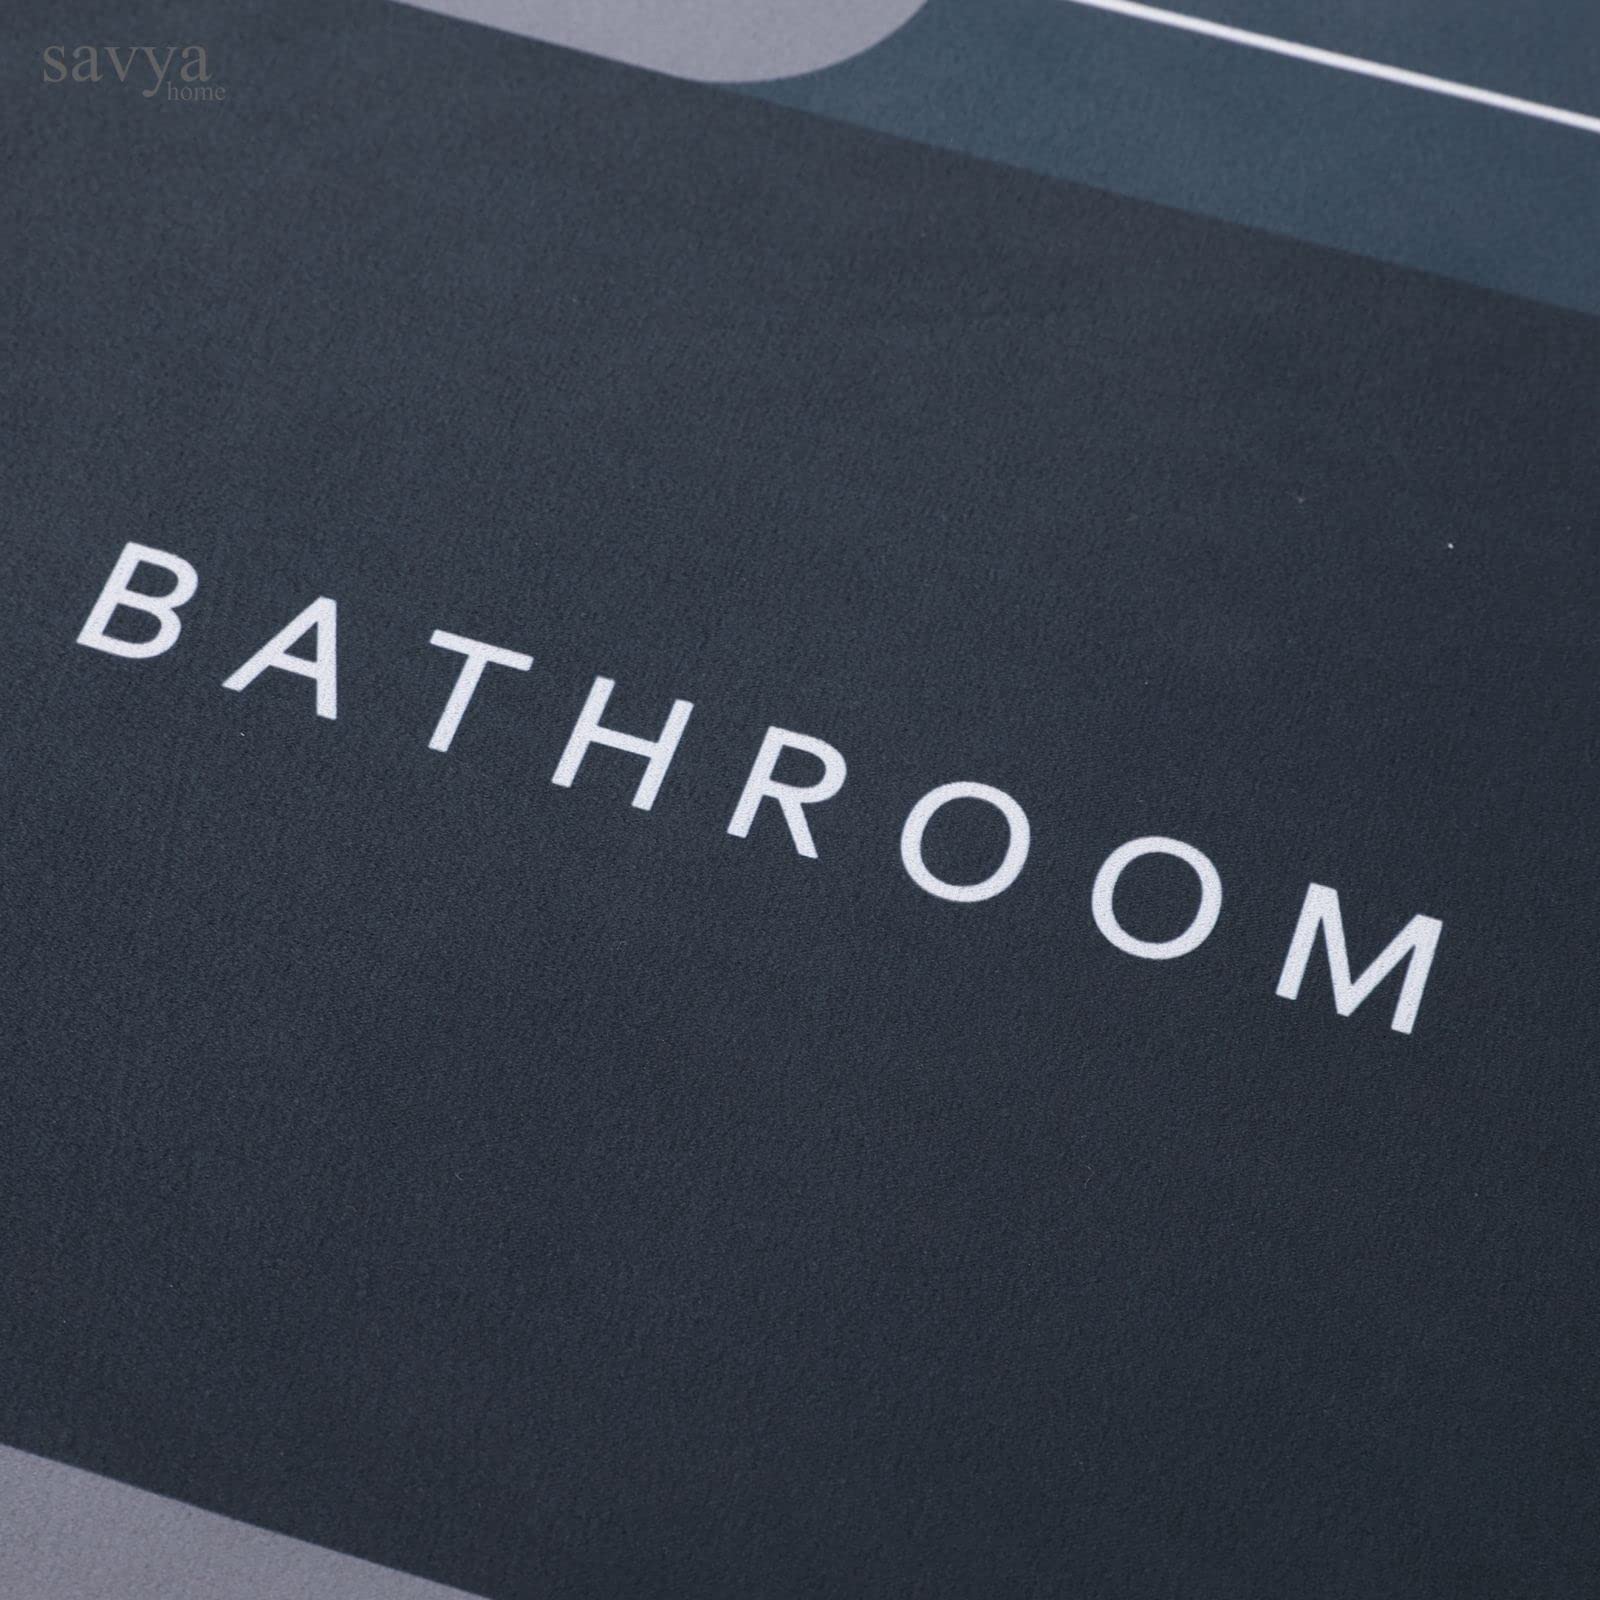 SAVYA HOME Bath mats || 60 x 40 || Anti-Slid mat for Living Room, Bathroom, Shower, Bathtub|Multipurpose mat (Oval (Dark Grey))